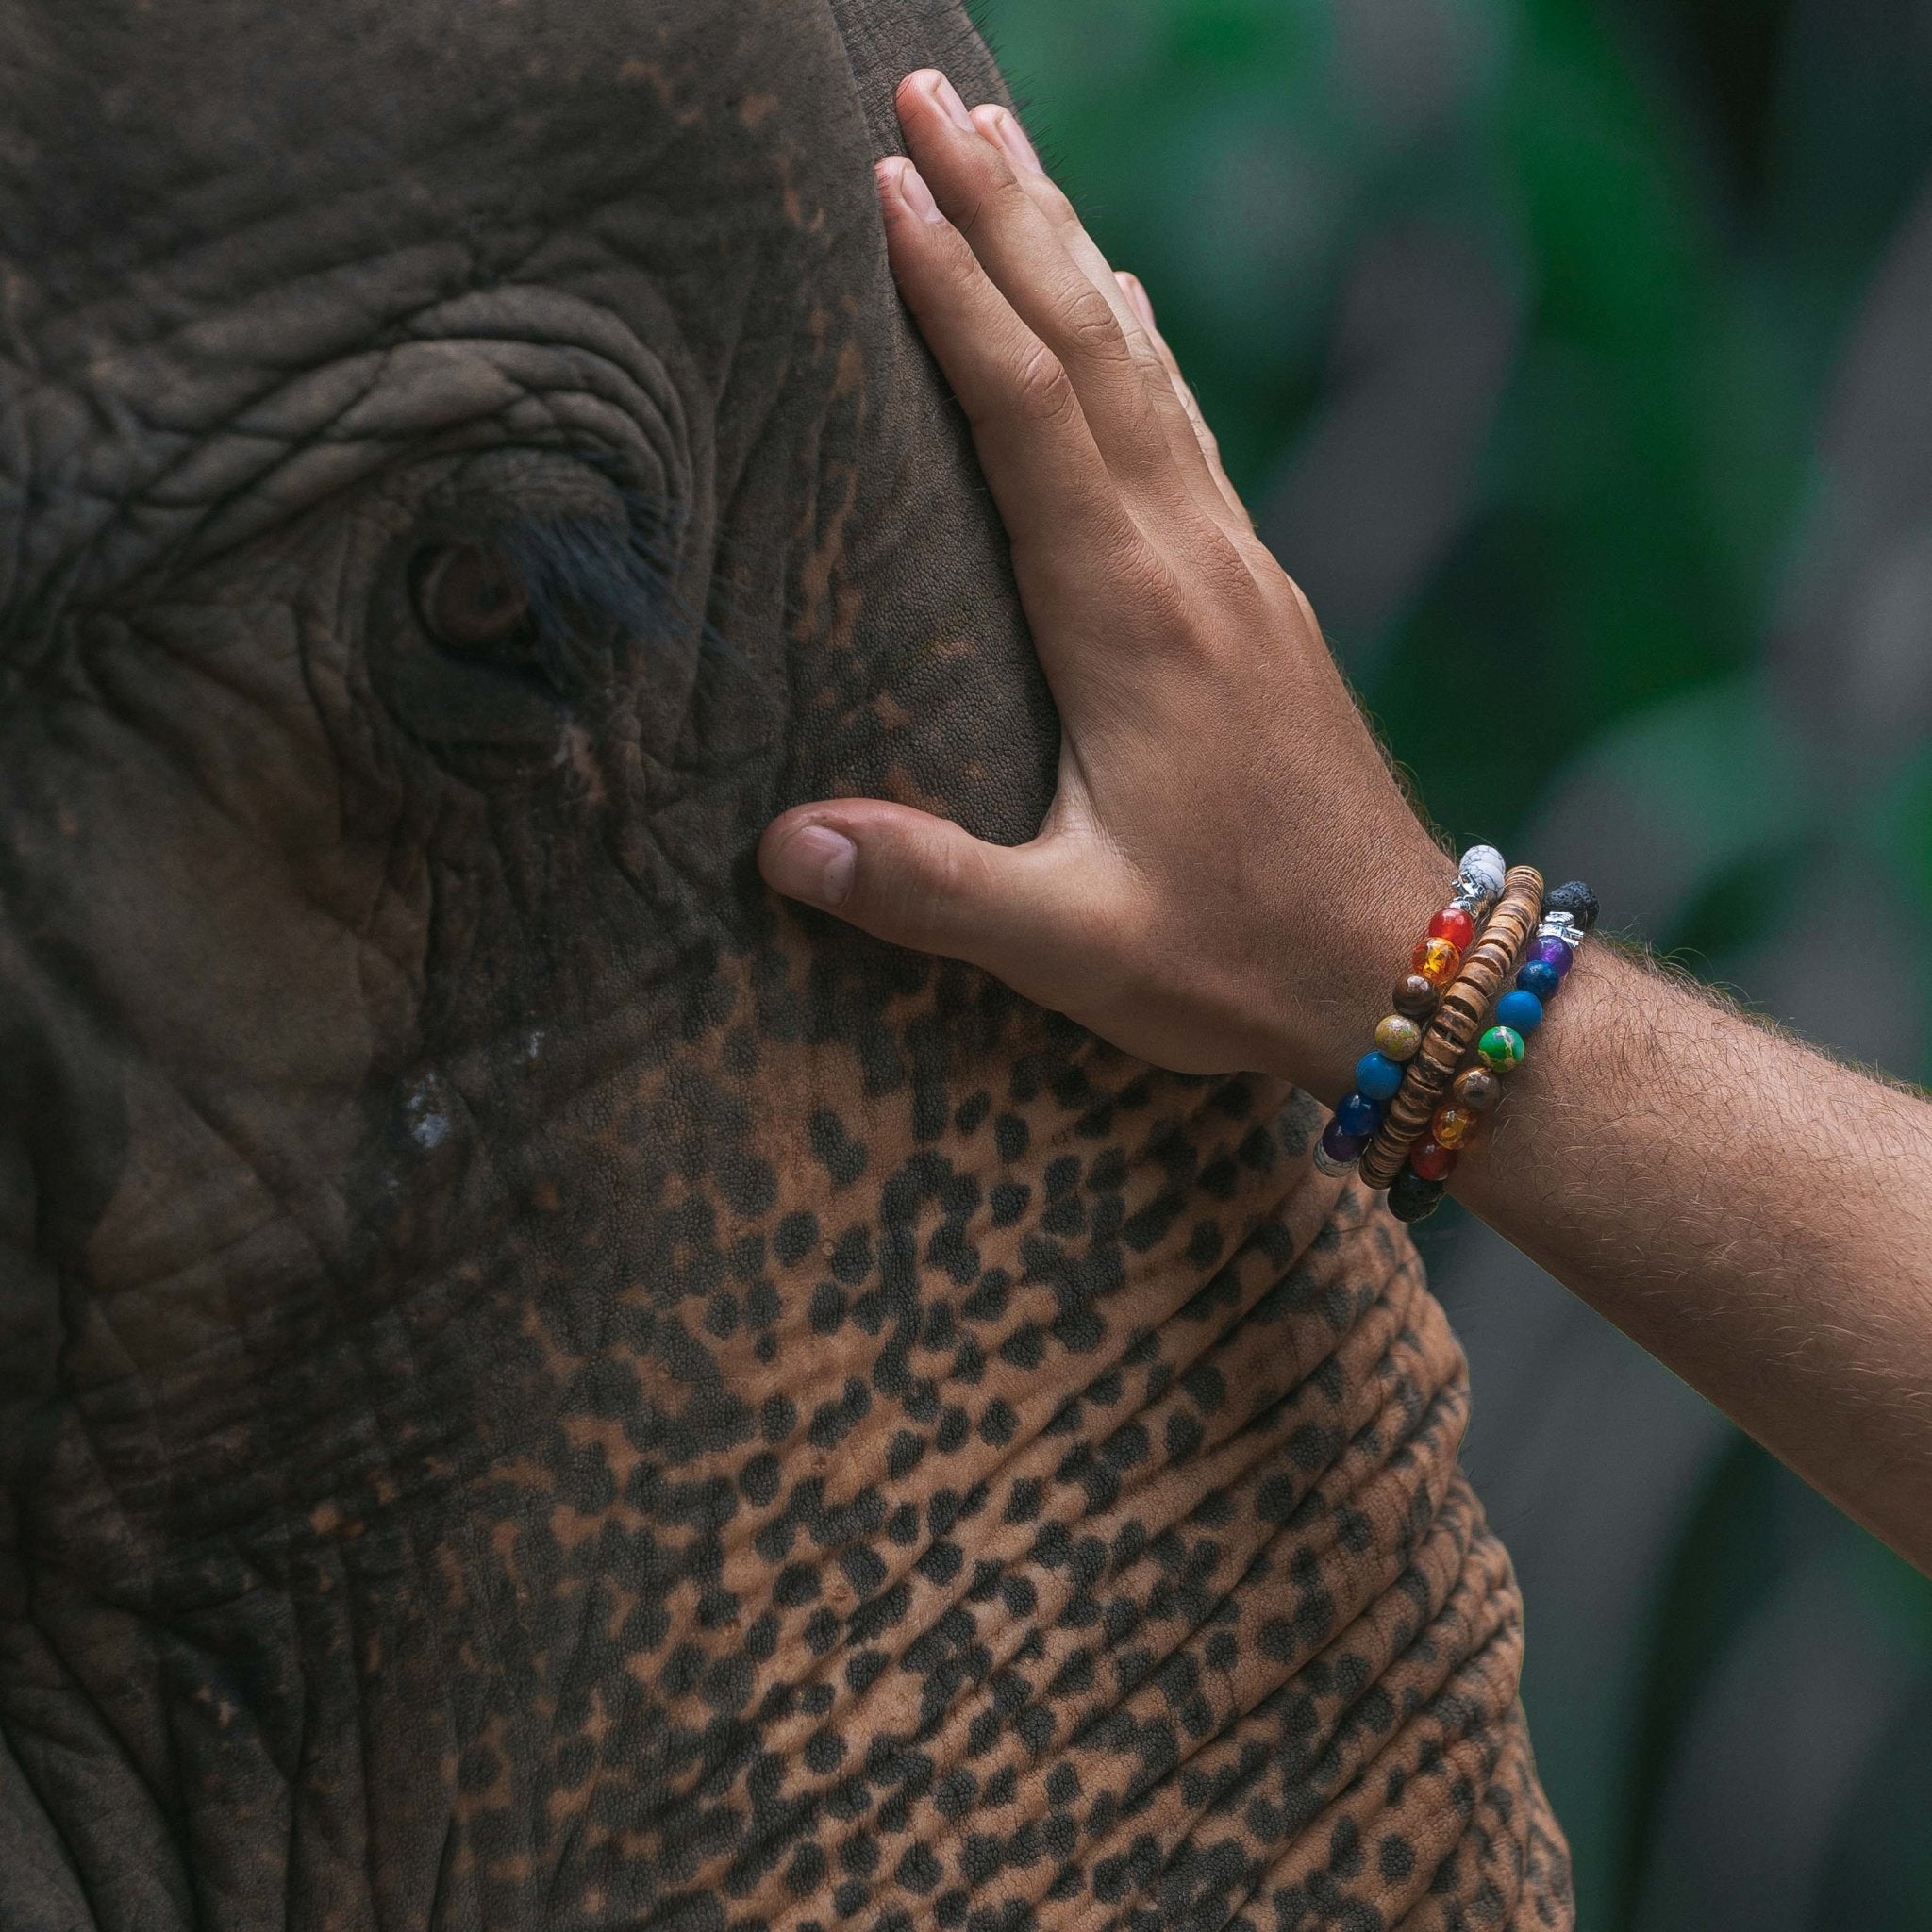 MALAWI ELEPHANT BRACELET Elepanta Elephant Bracelet - Buy Today Elephant Pants Jewelry And Bohemian Clothes Handmade In Thailand Help To Save The Elephants FairTrade And Vegan